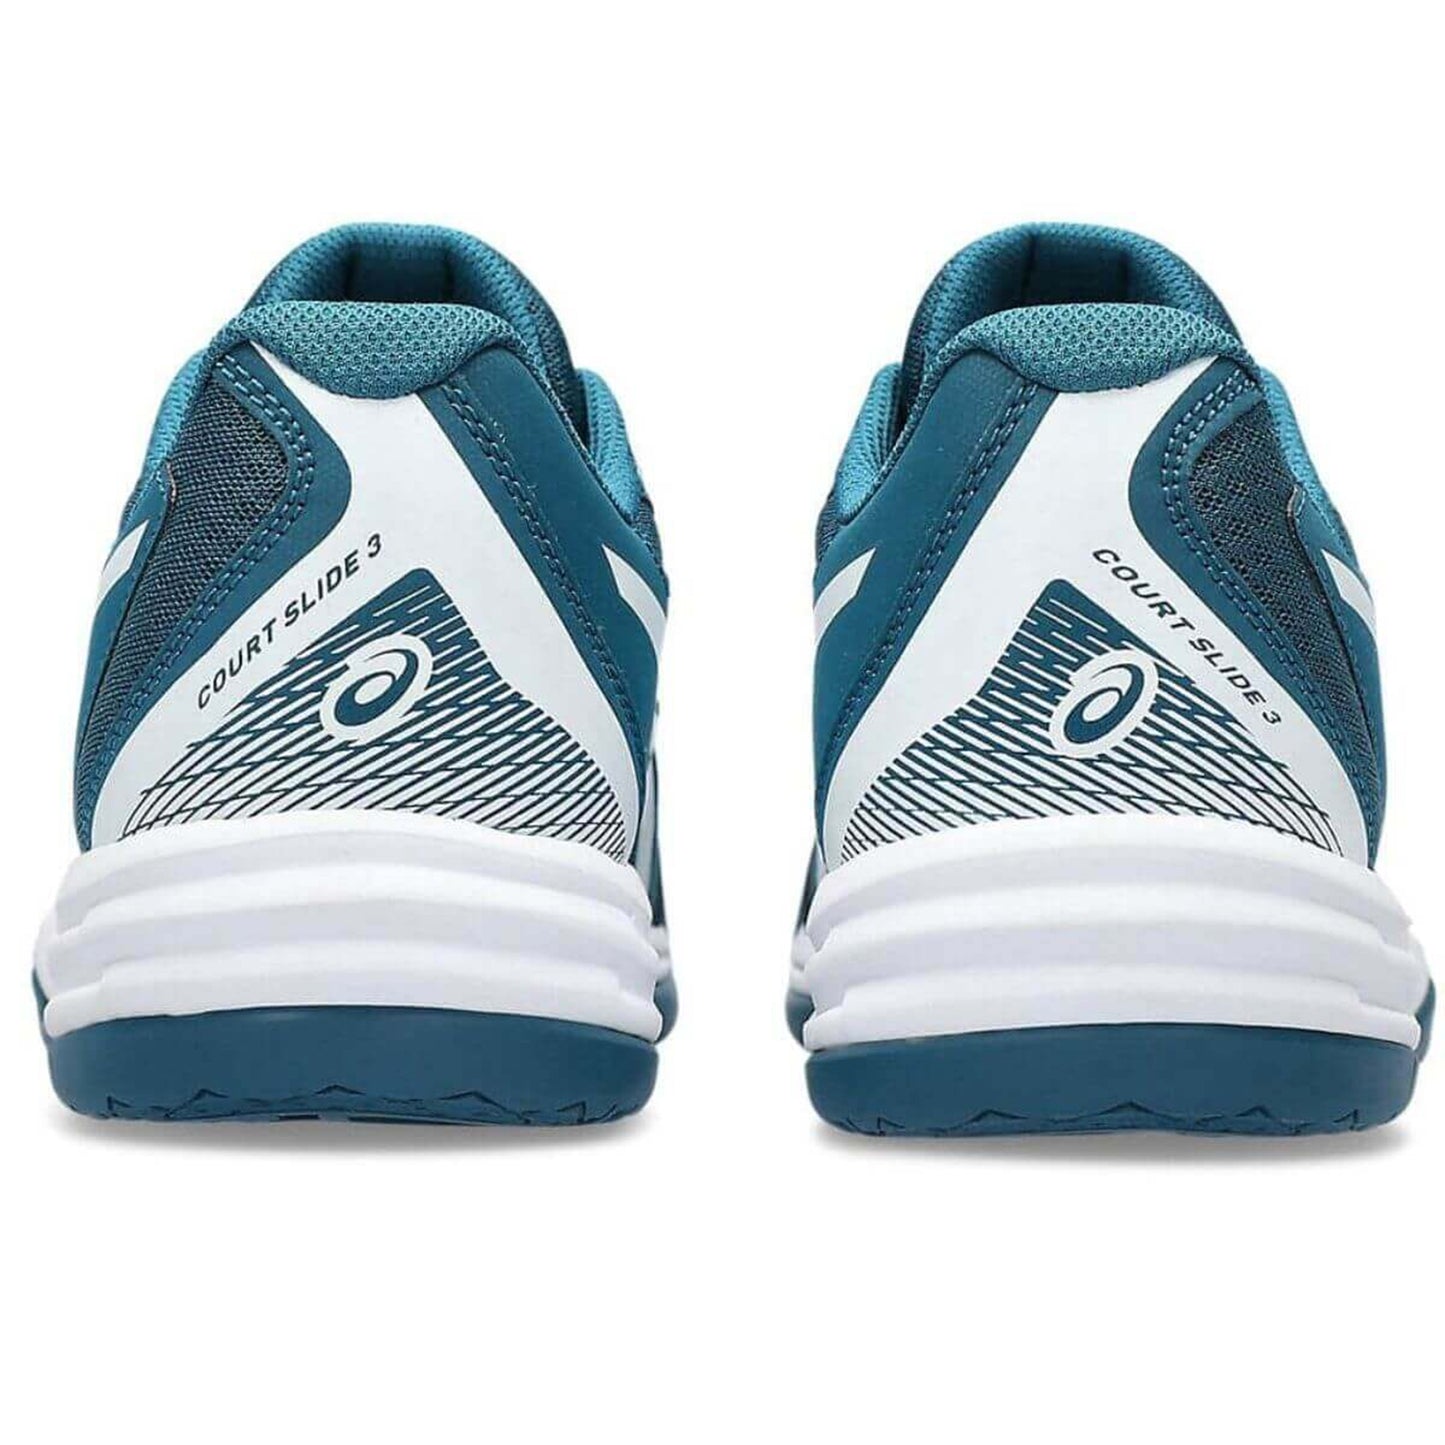 Asics Court Slide 3  Men's Tennis Shoes - Best Price online Prokicksports.com